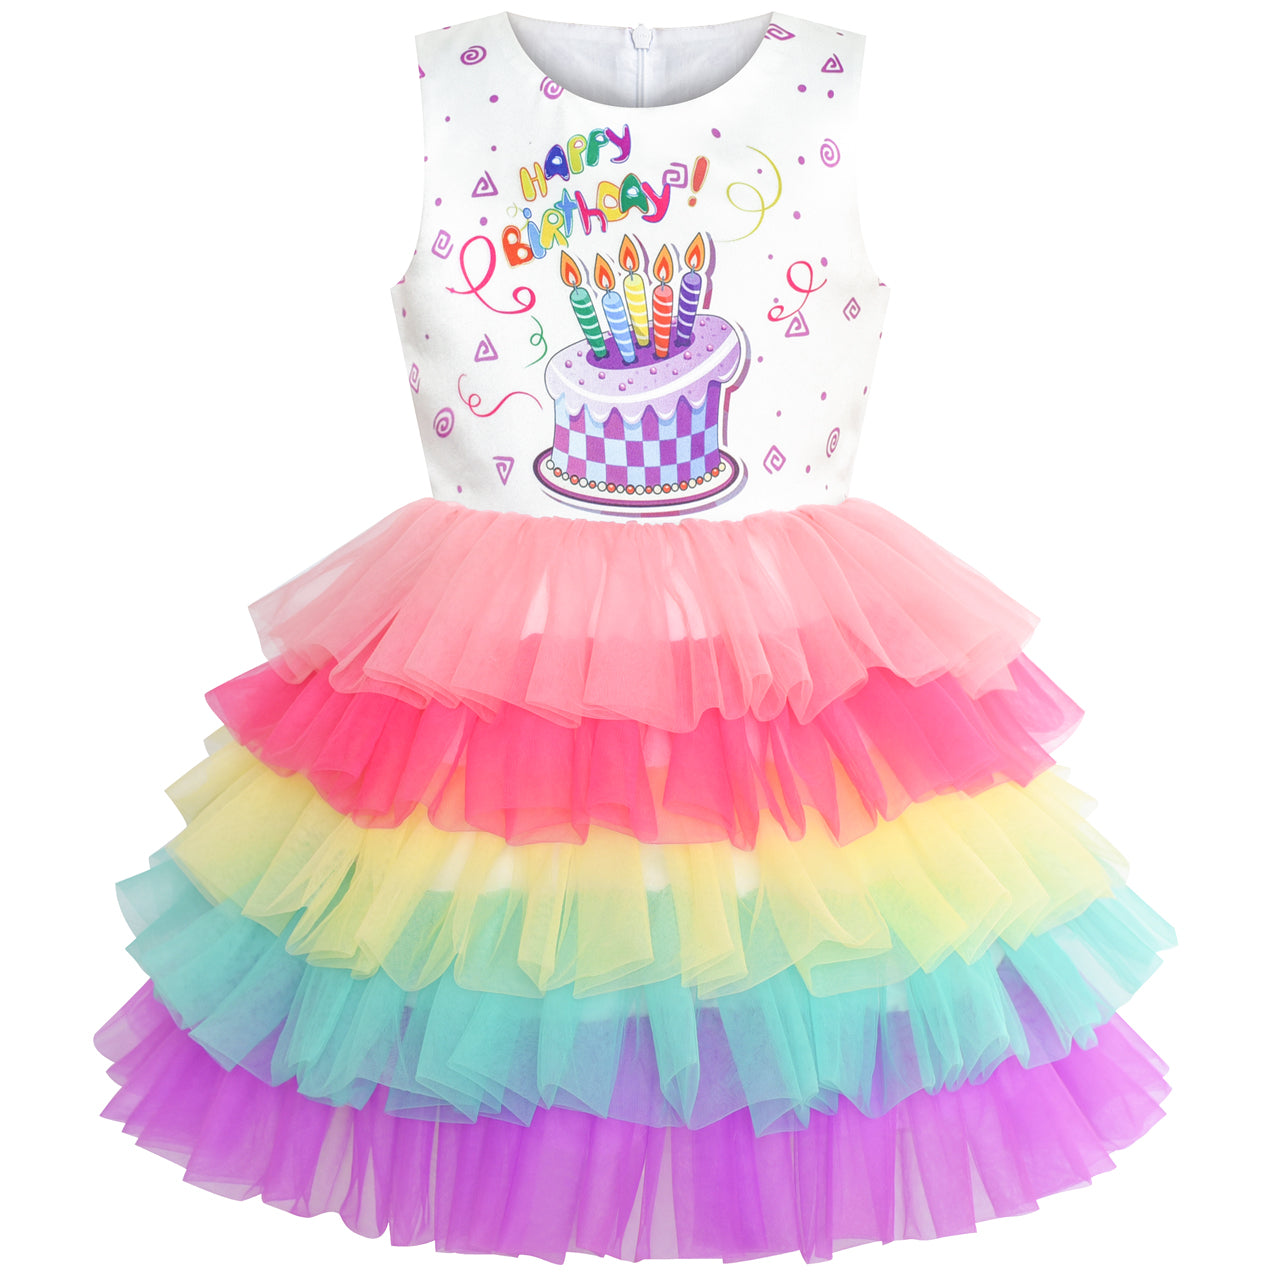 7 year old birthday dress